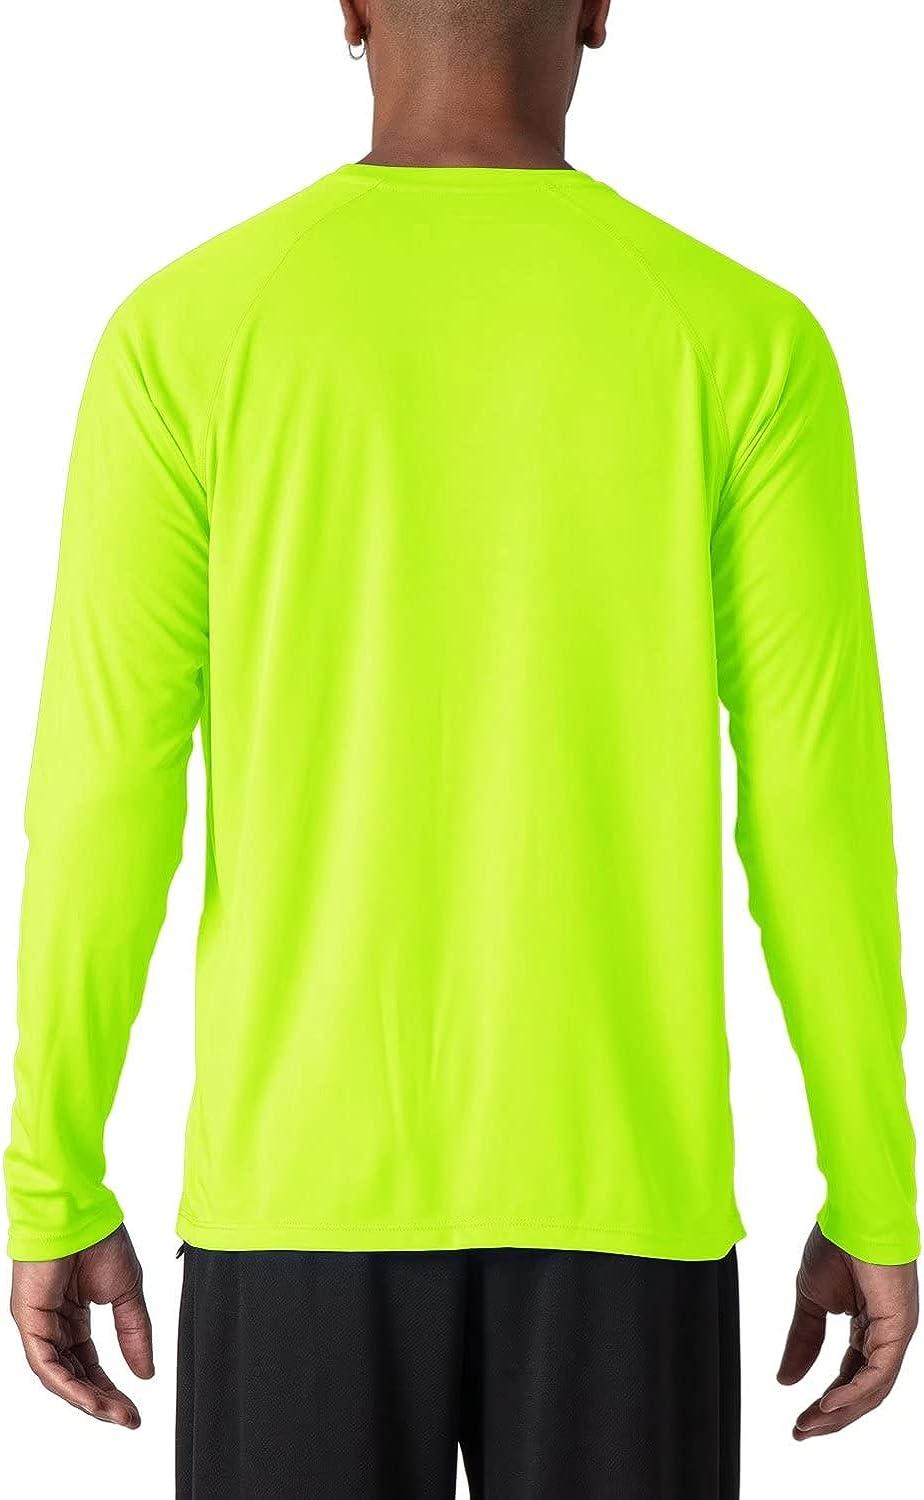 MAGCOMSEN Men's Long Sleeve Shirts UPF 50+ UV Sun Protection